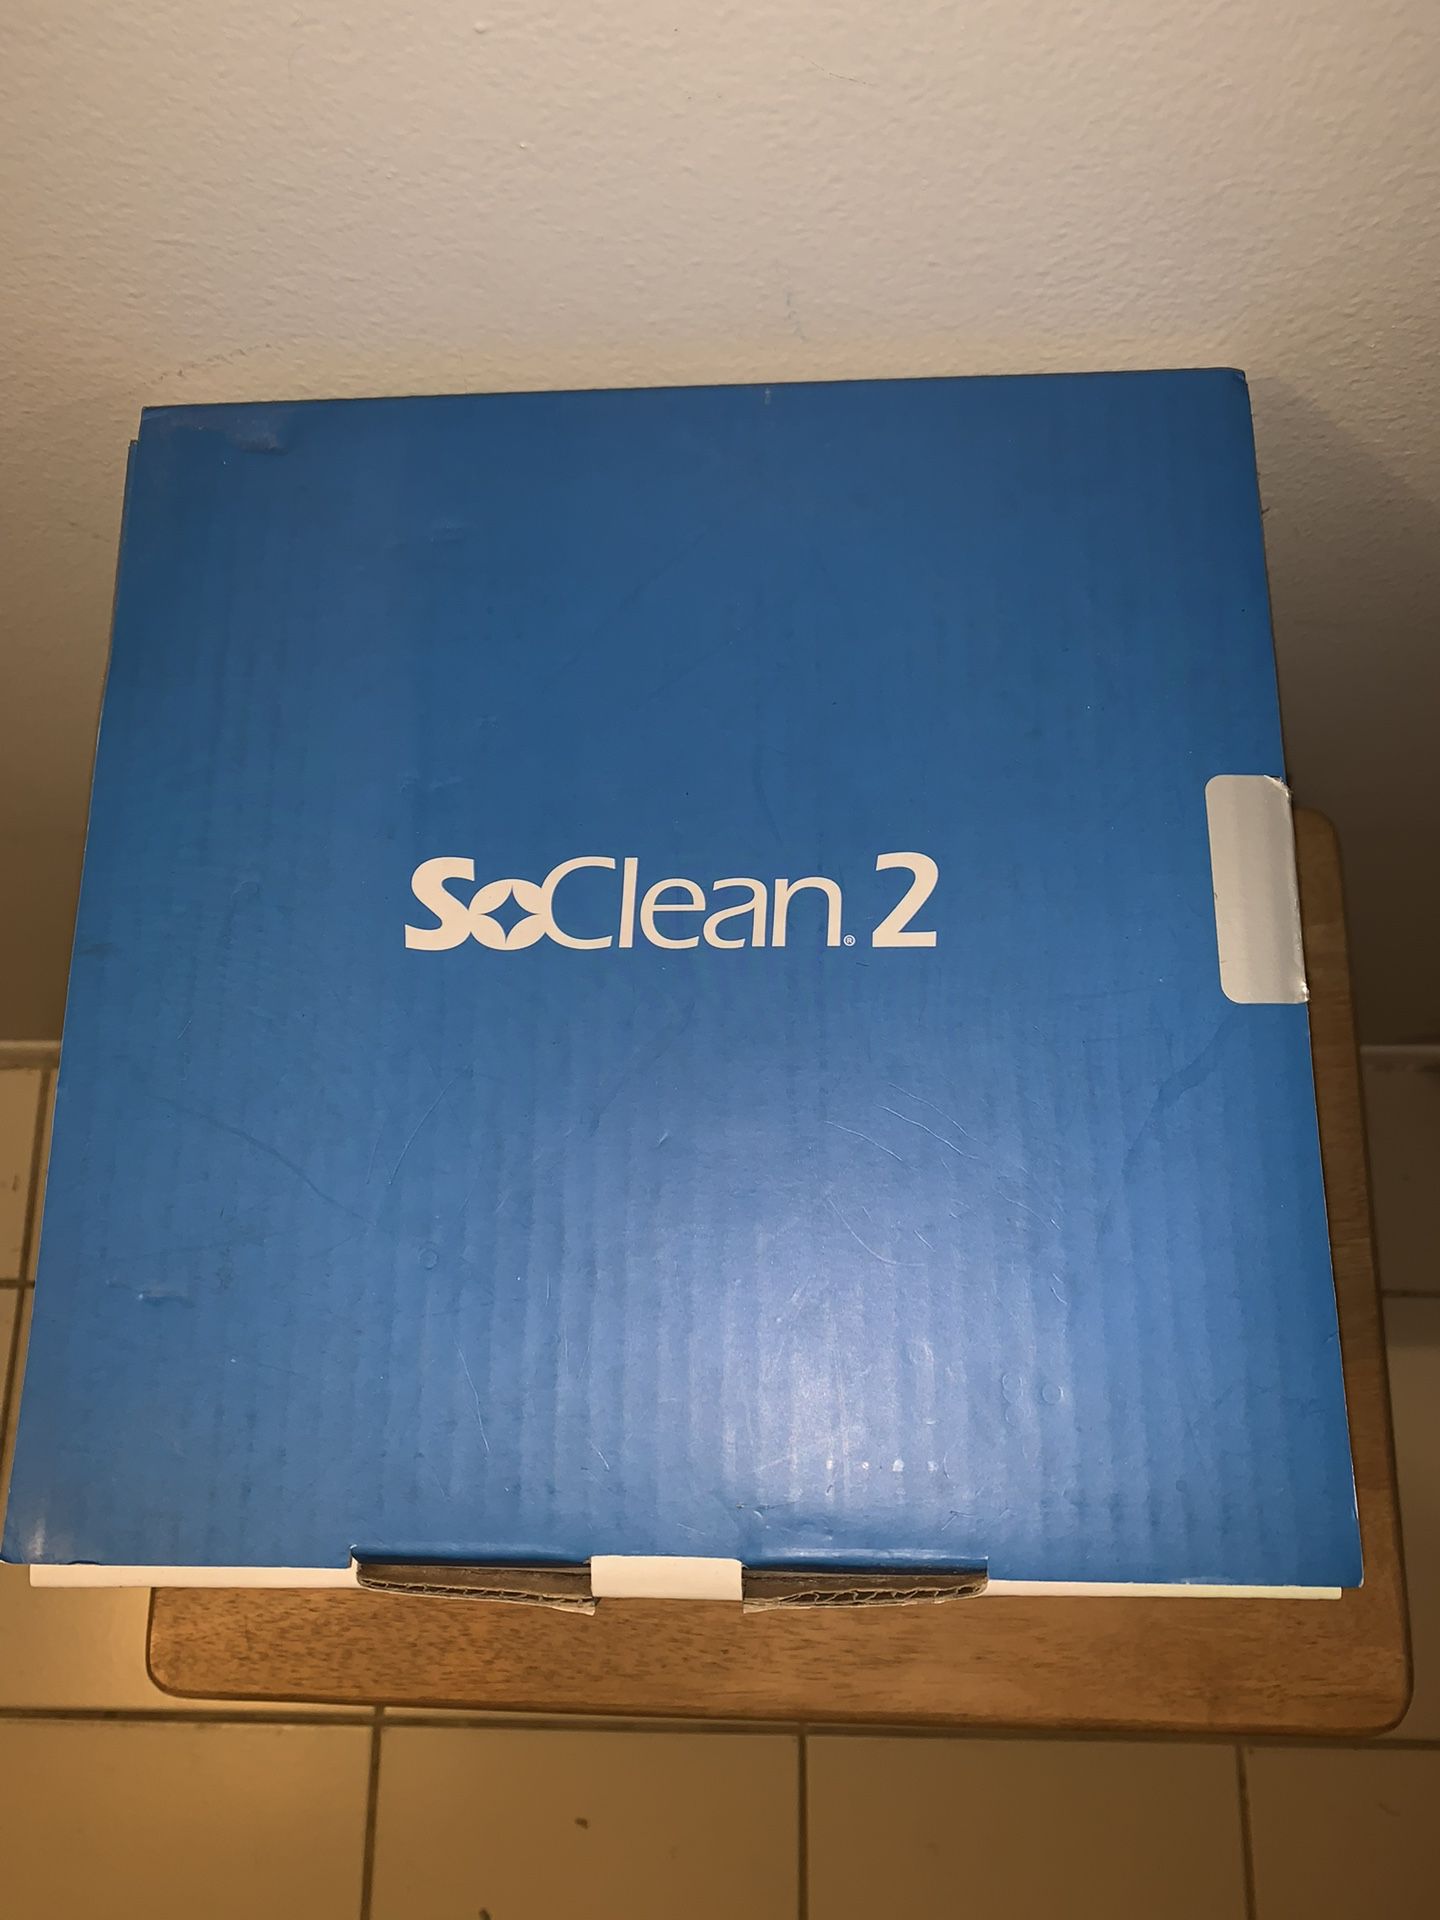 SoClean 2 SC1200